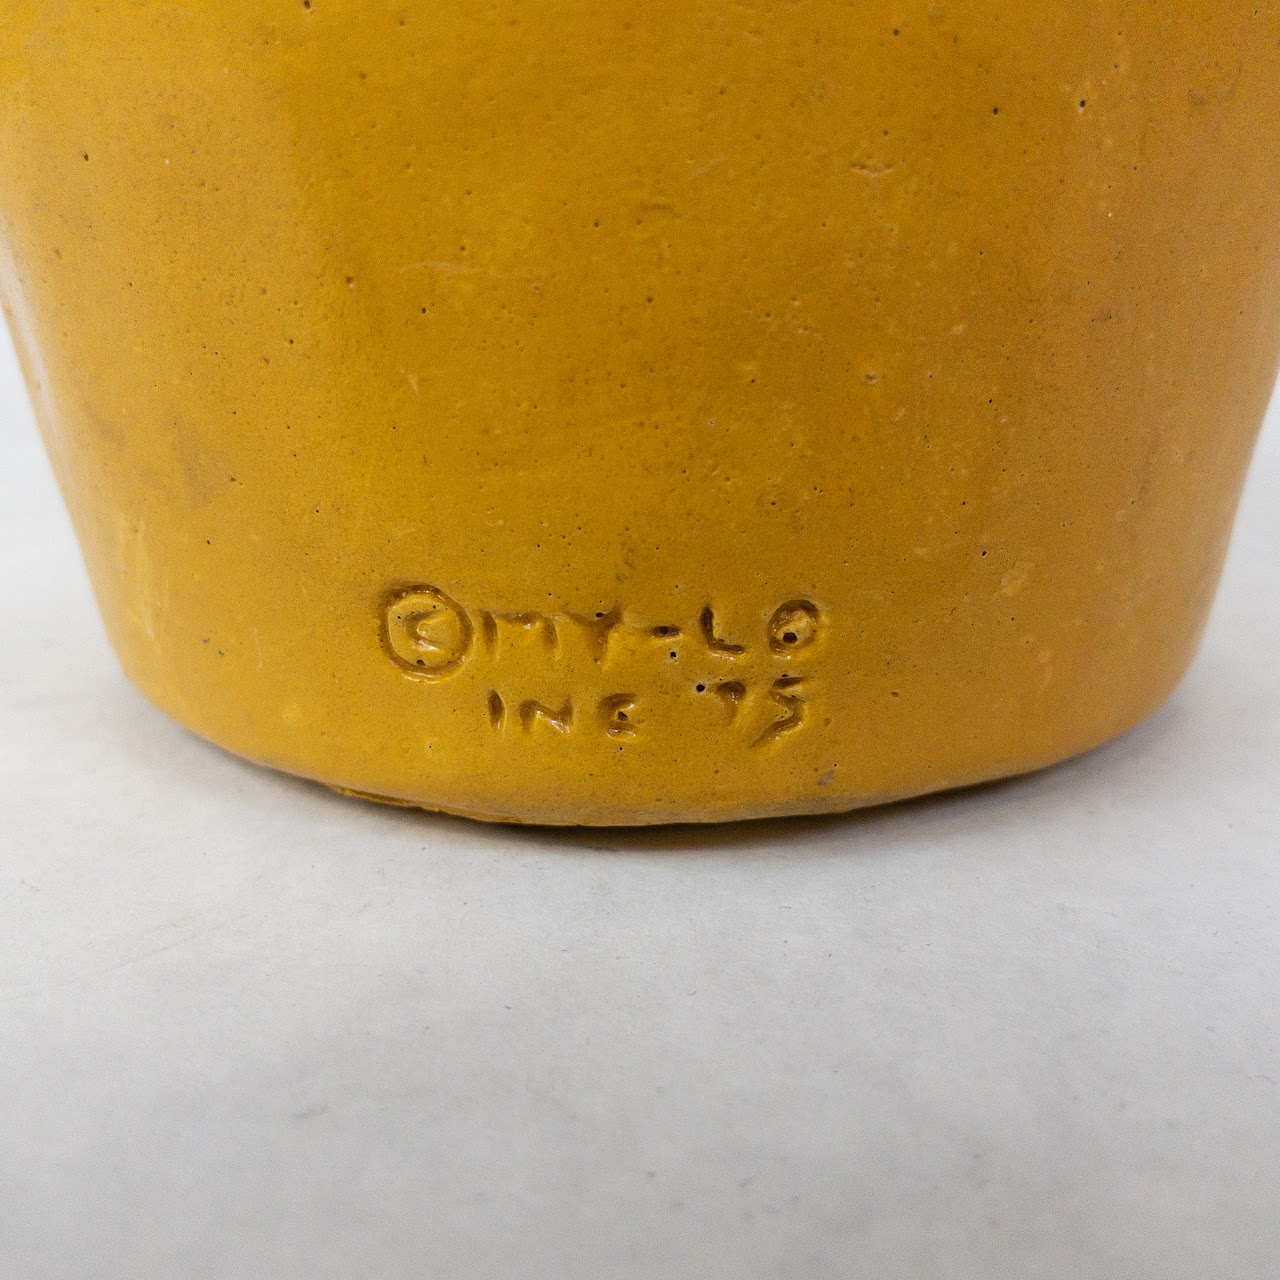 Vintage French's Mustard Jar Planter